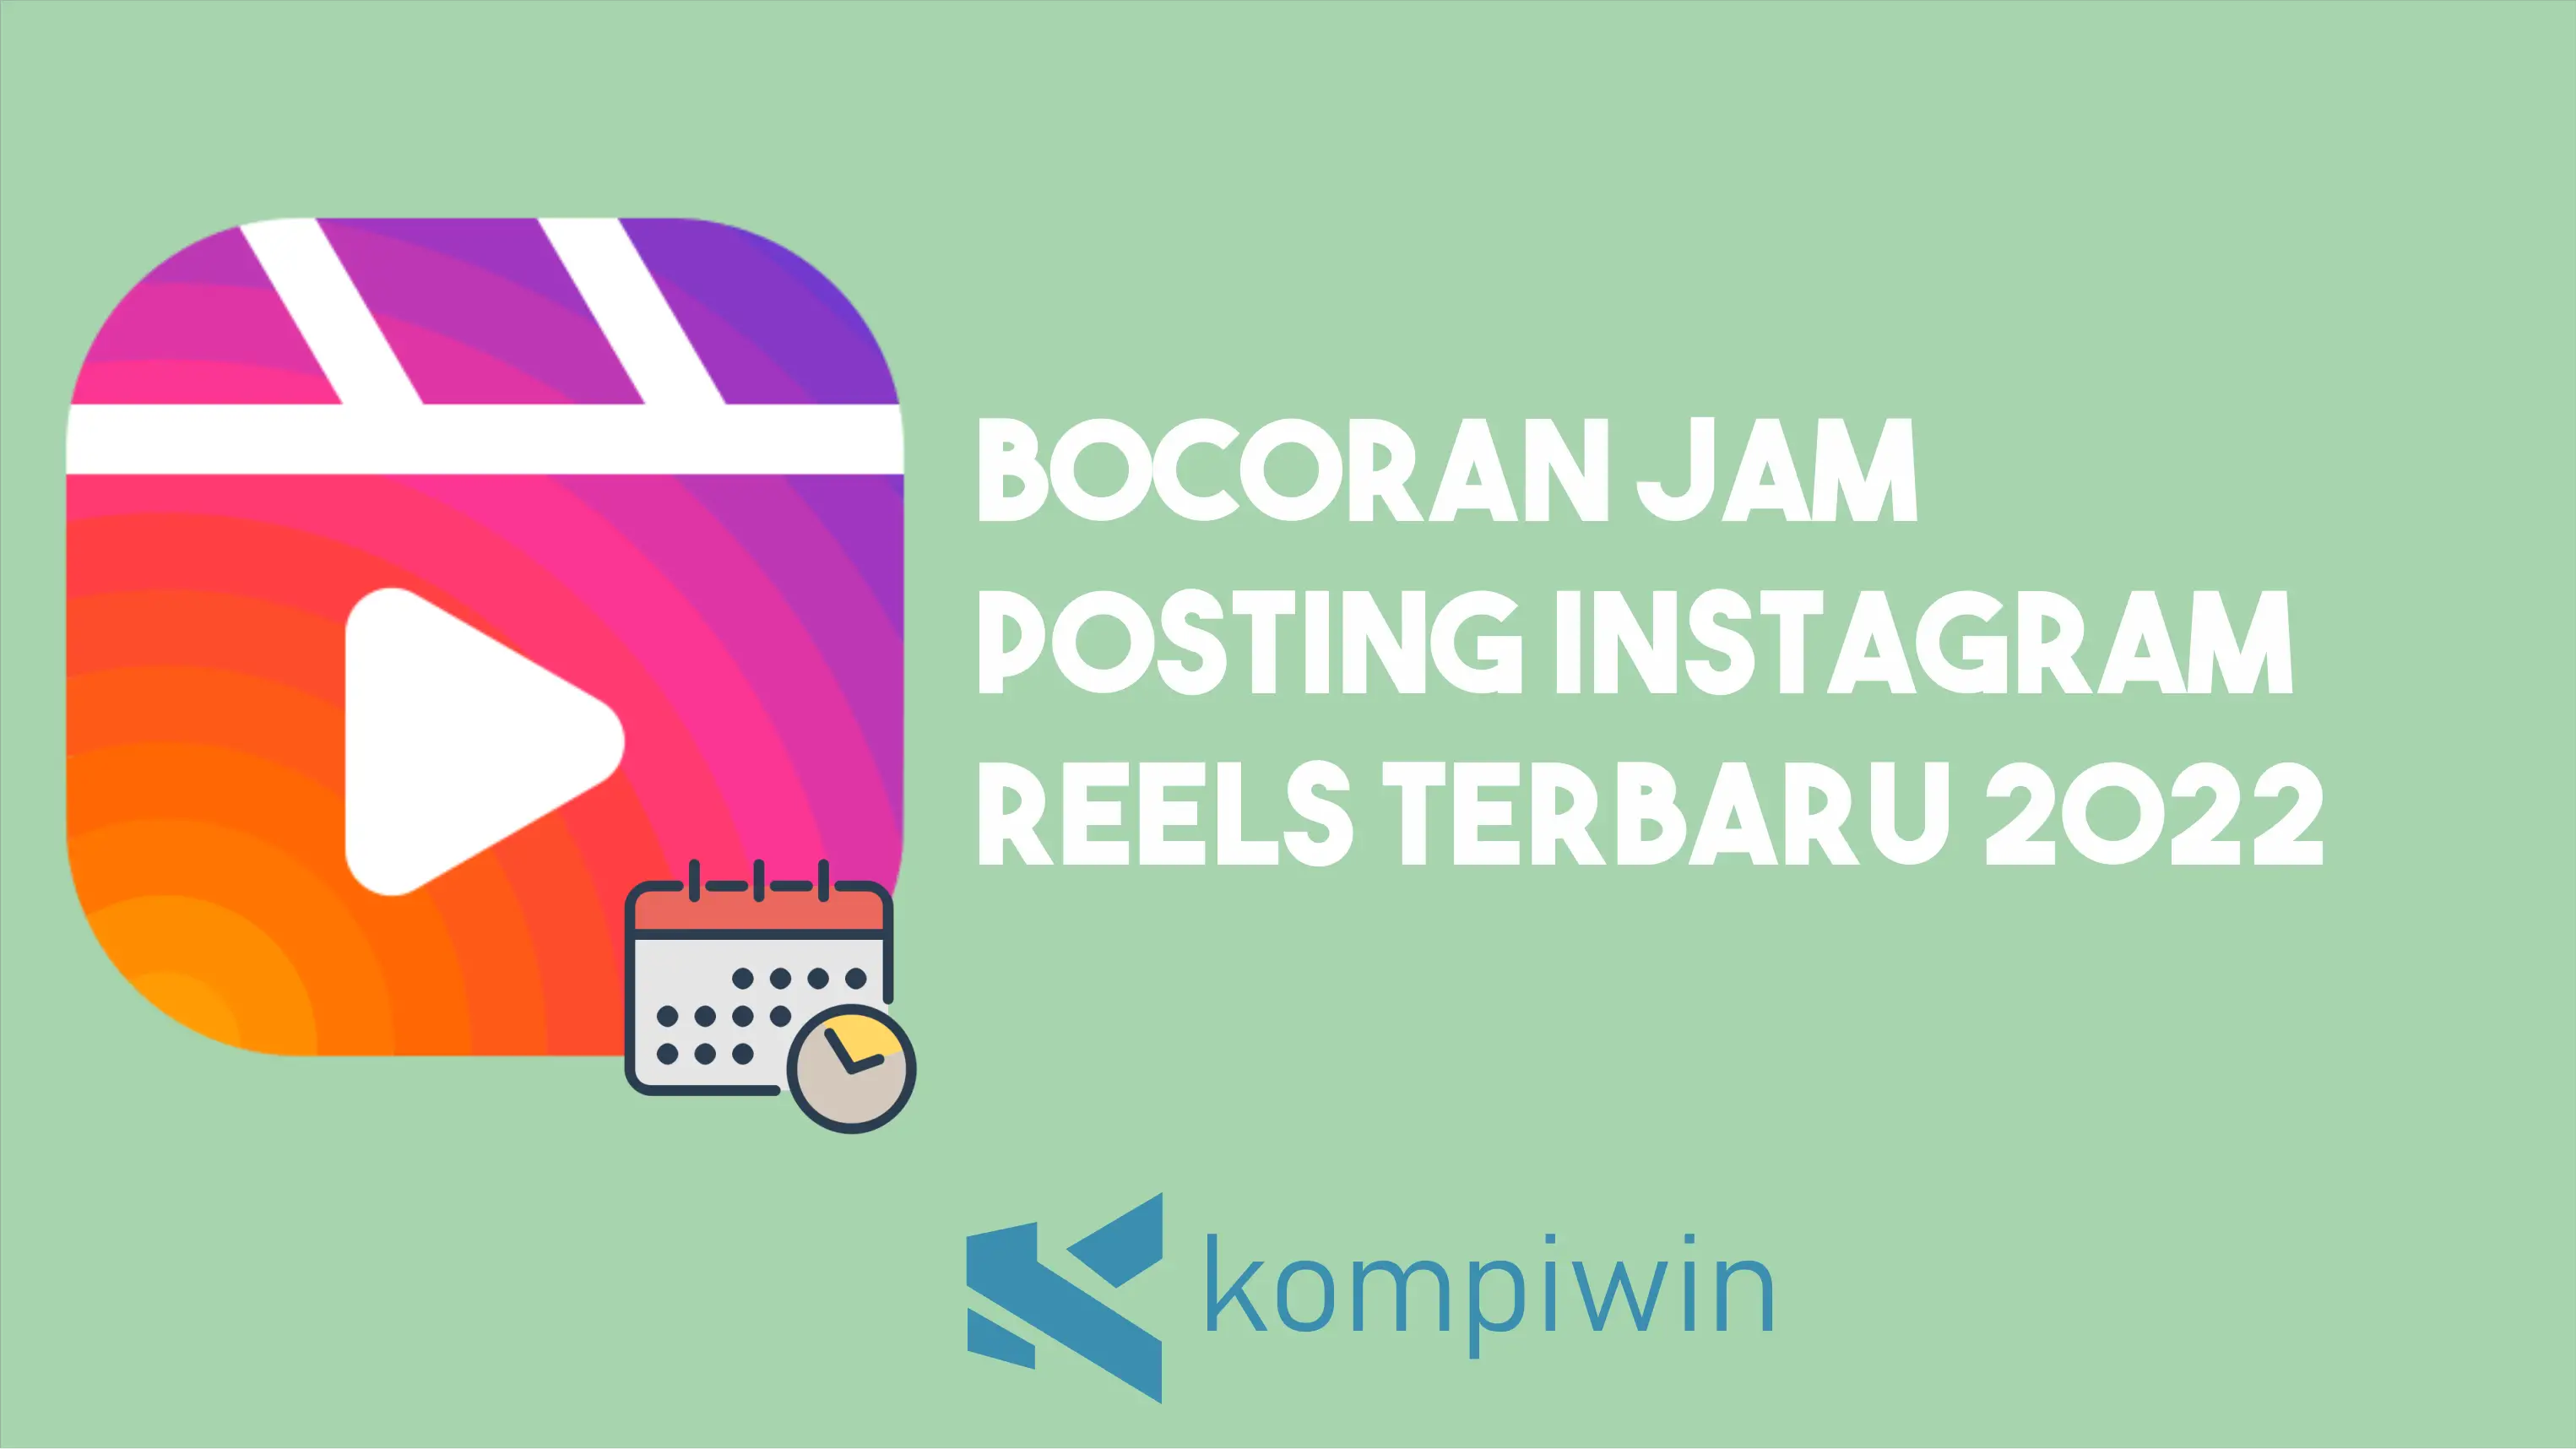 Bocoran Jam Posting Instagram Reels Terbaru 2022